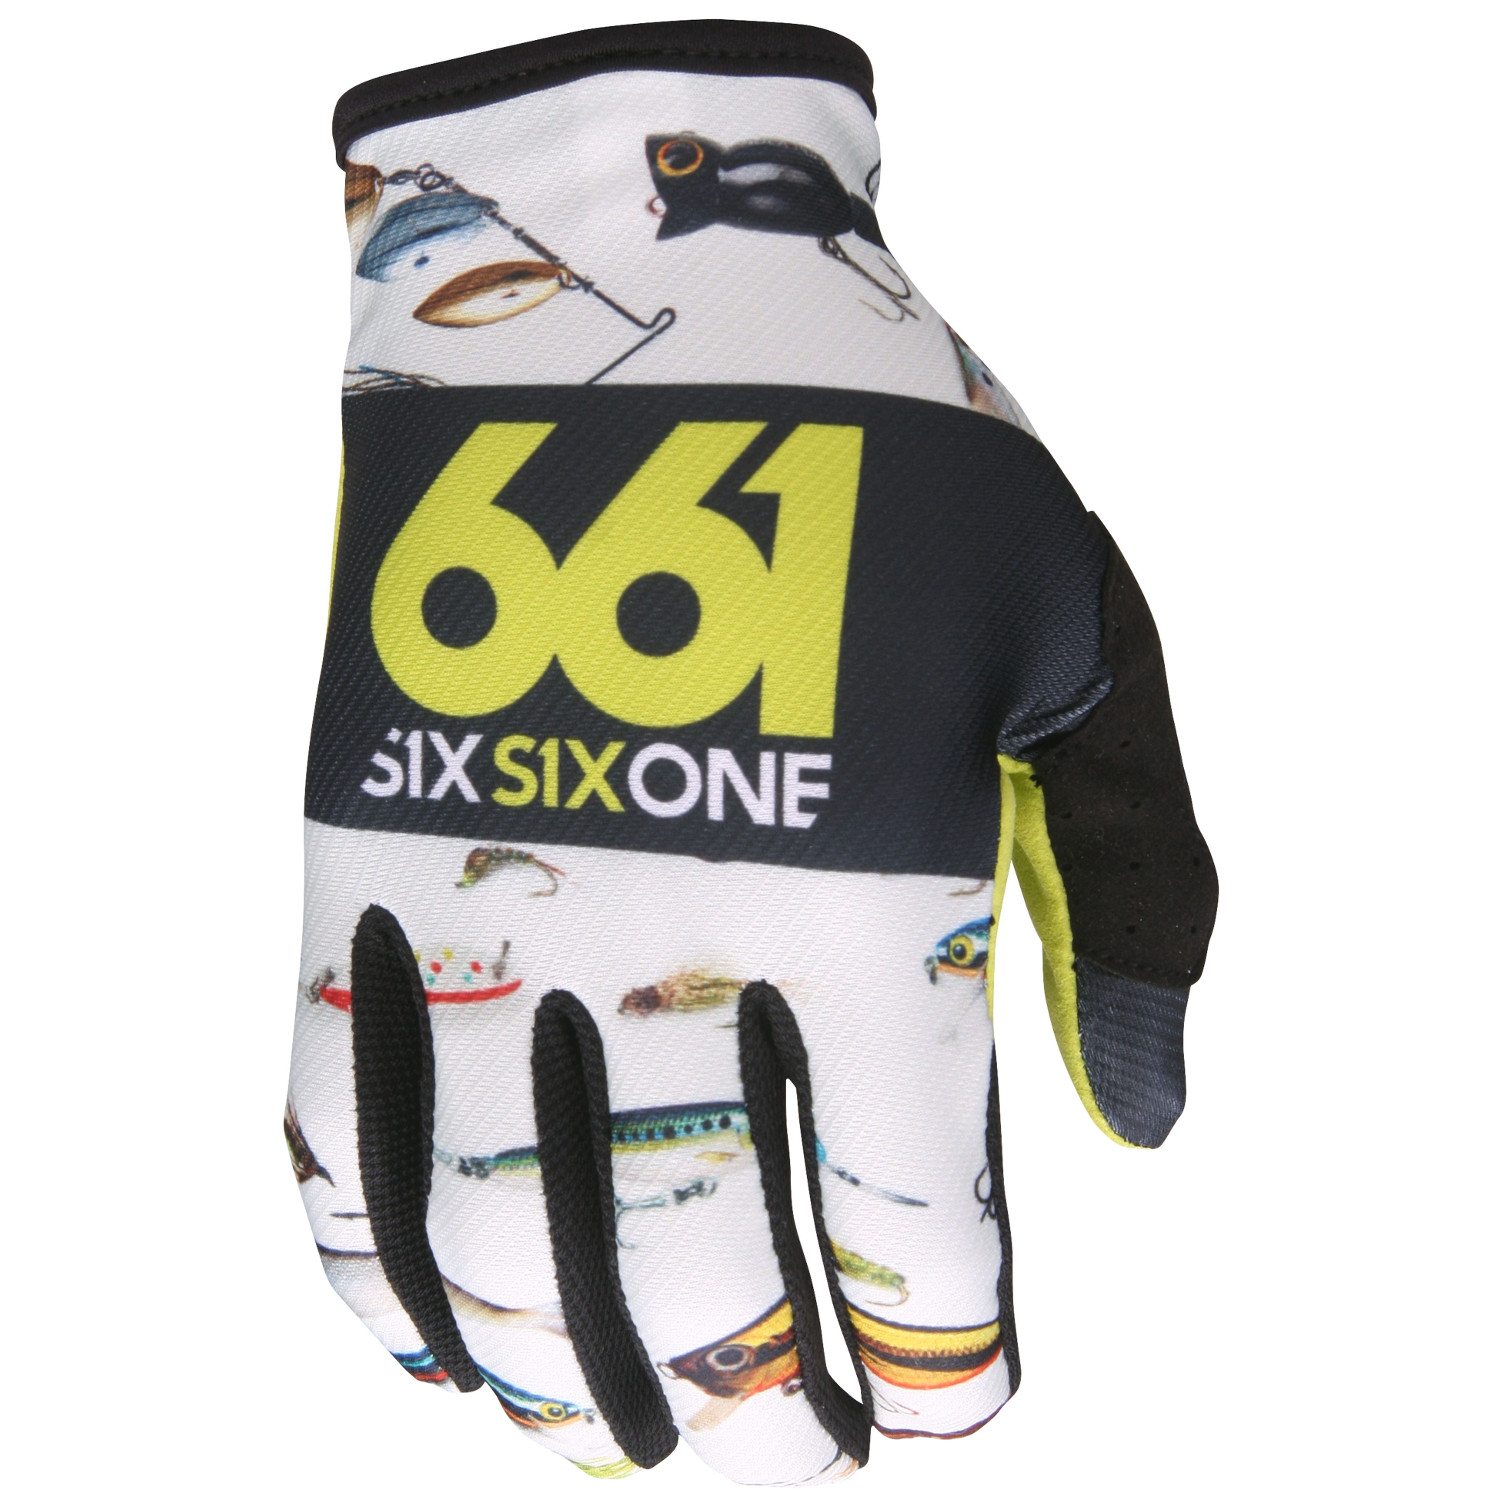 SixSixOne Handschuhe Comp Lure